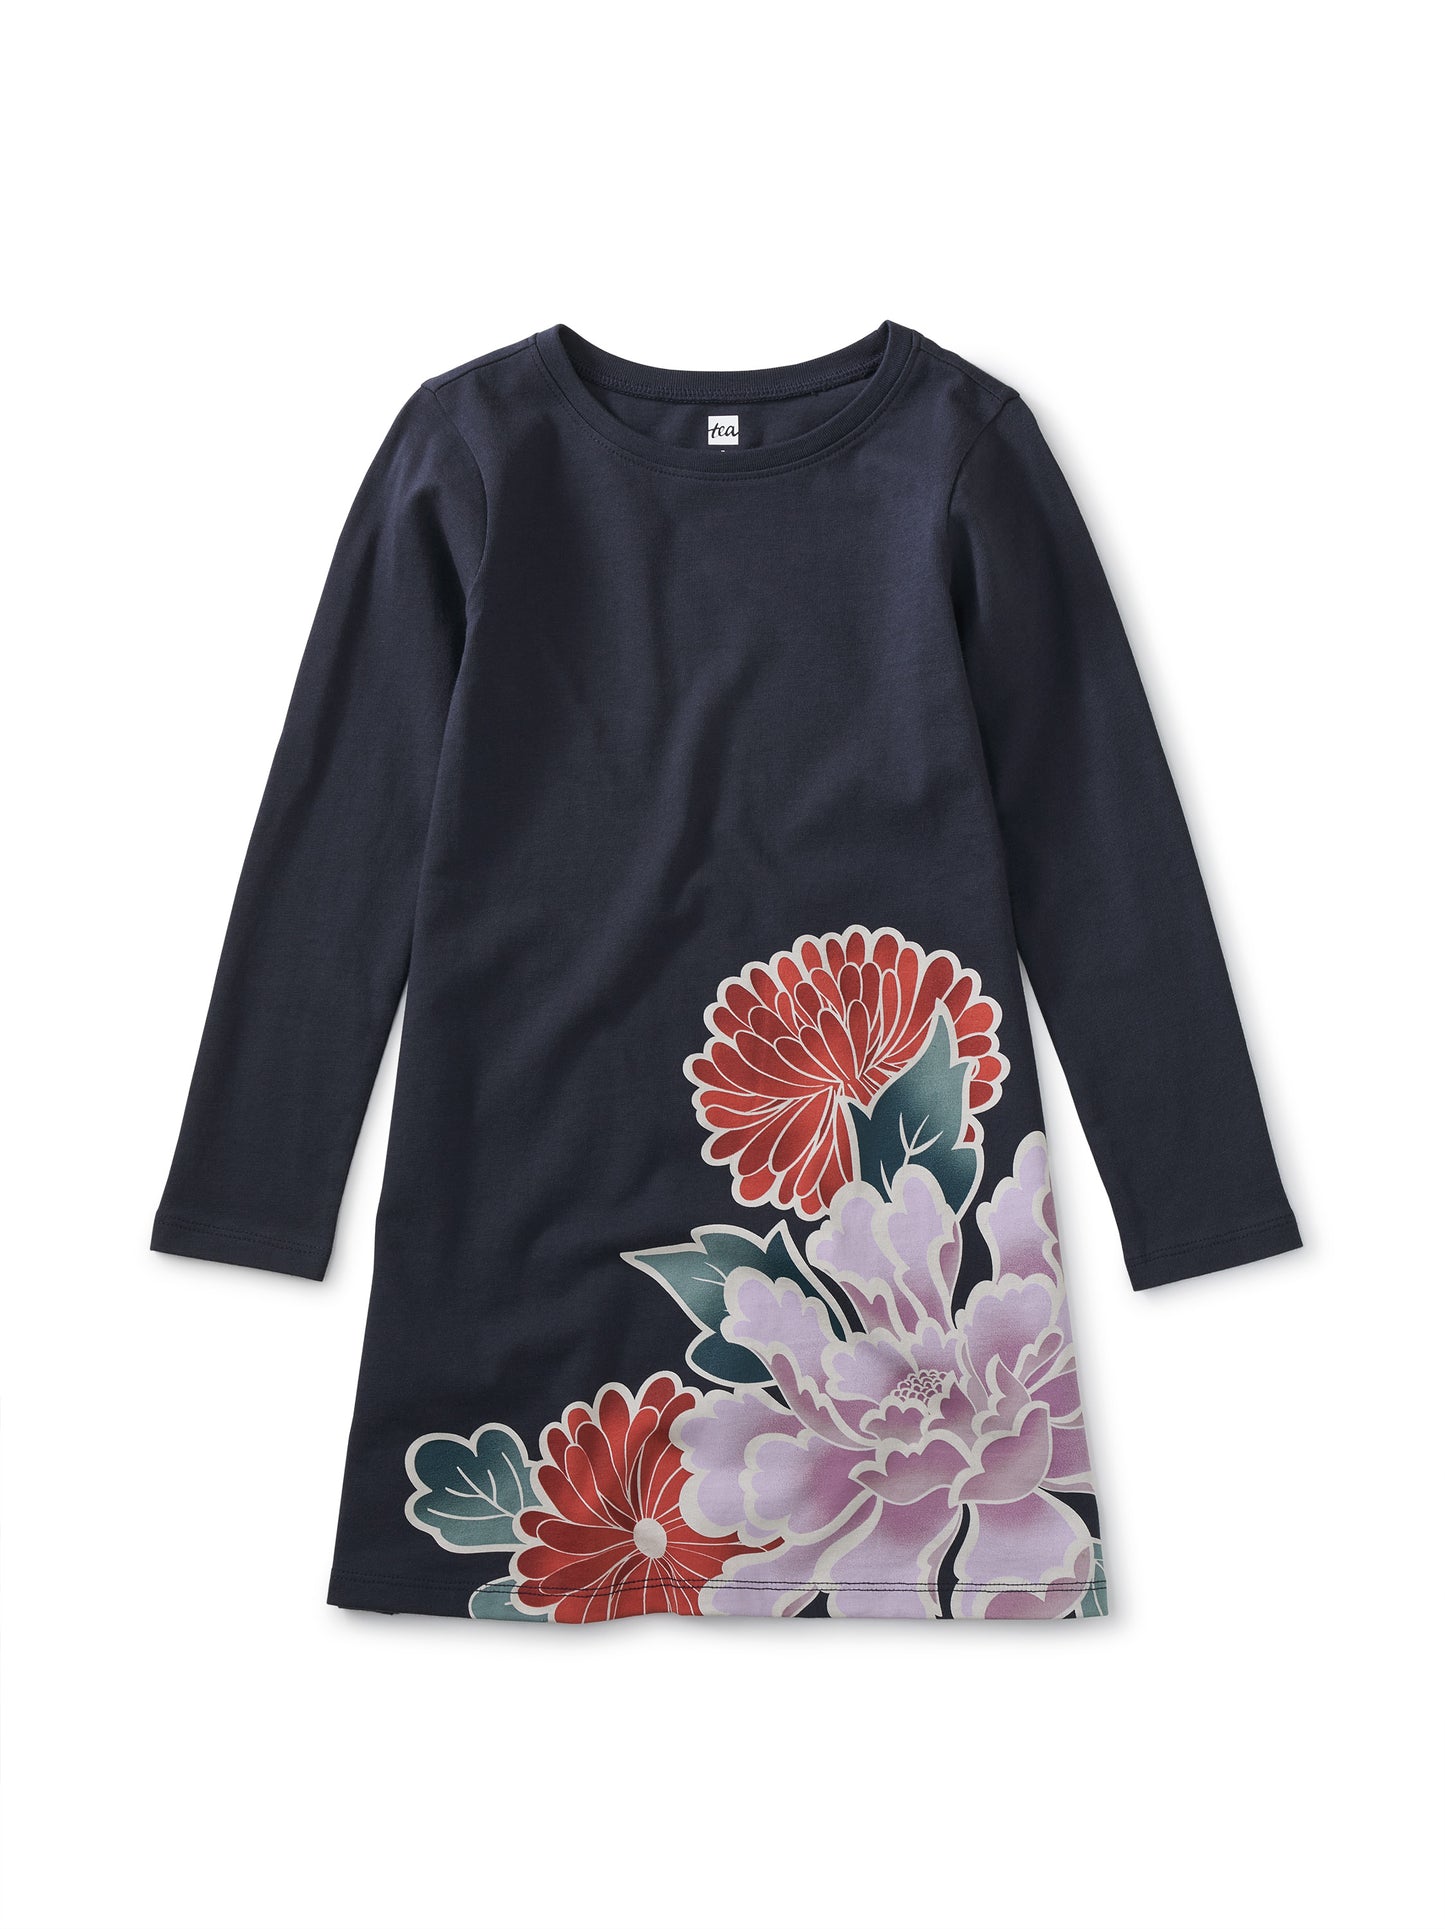 Tea Collection Dress - Chrysanthemum